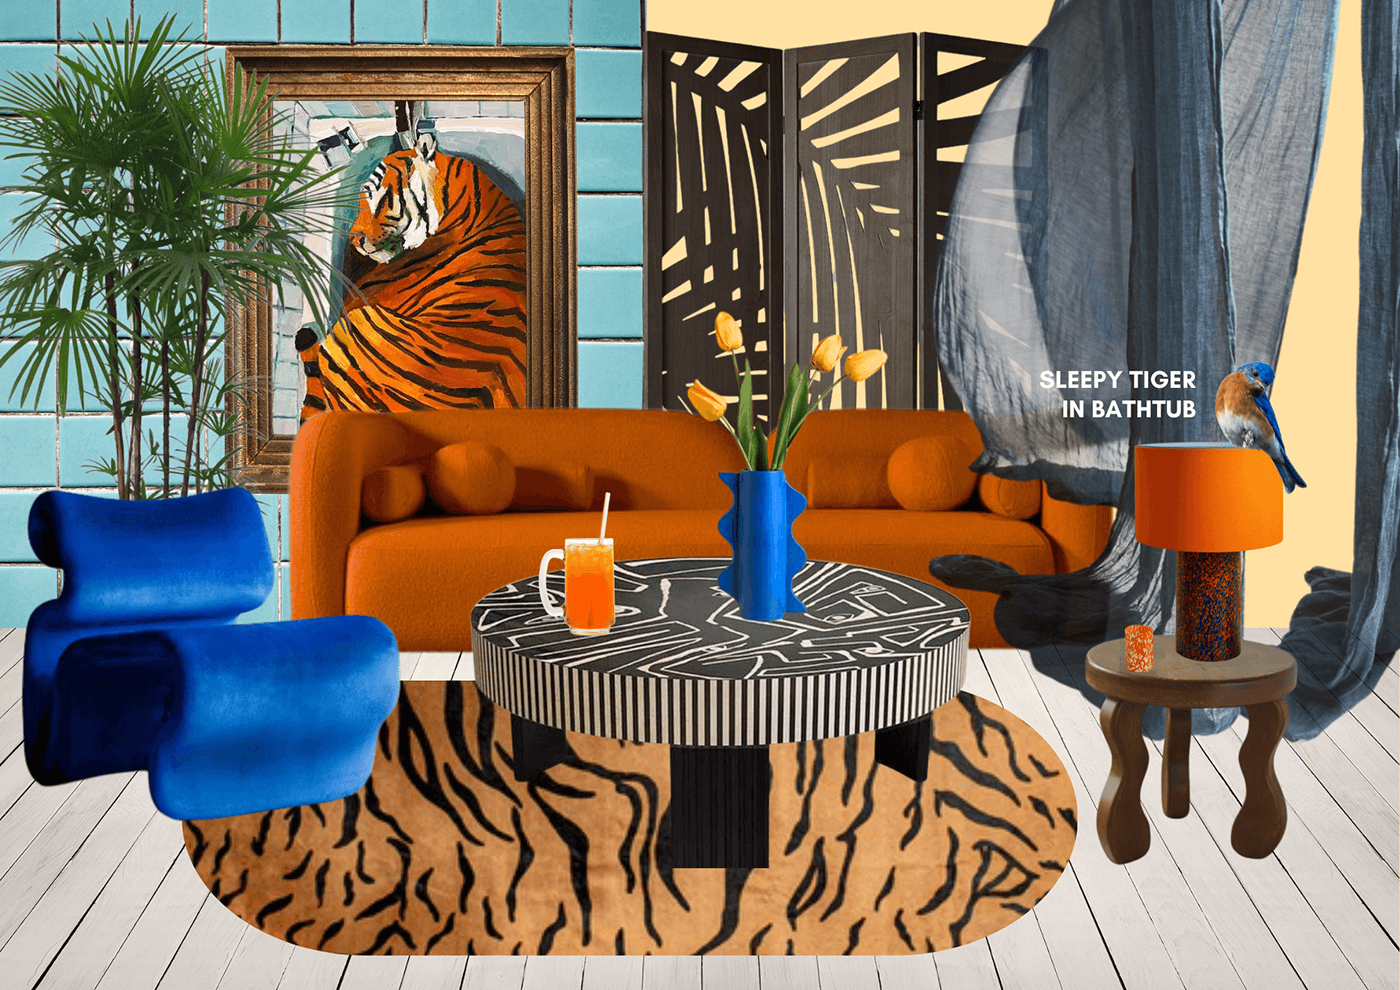 moodboard mood board interior design  modern tiger mouse horses mood moodboards collage